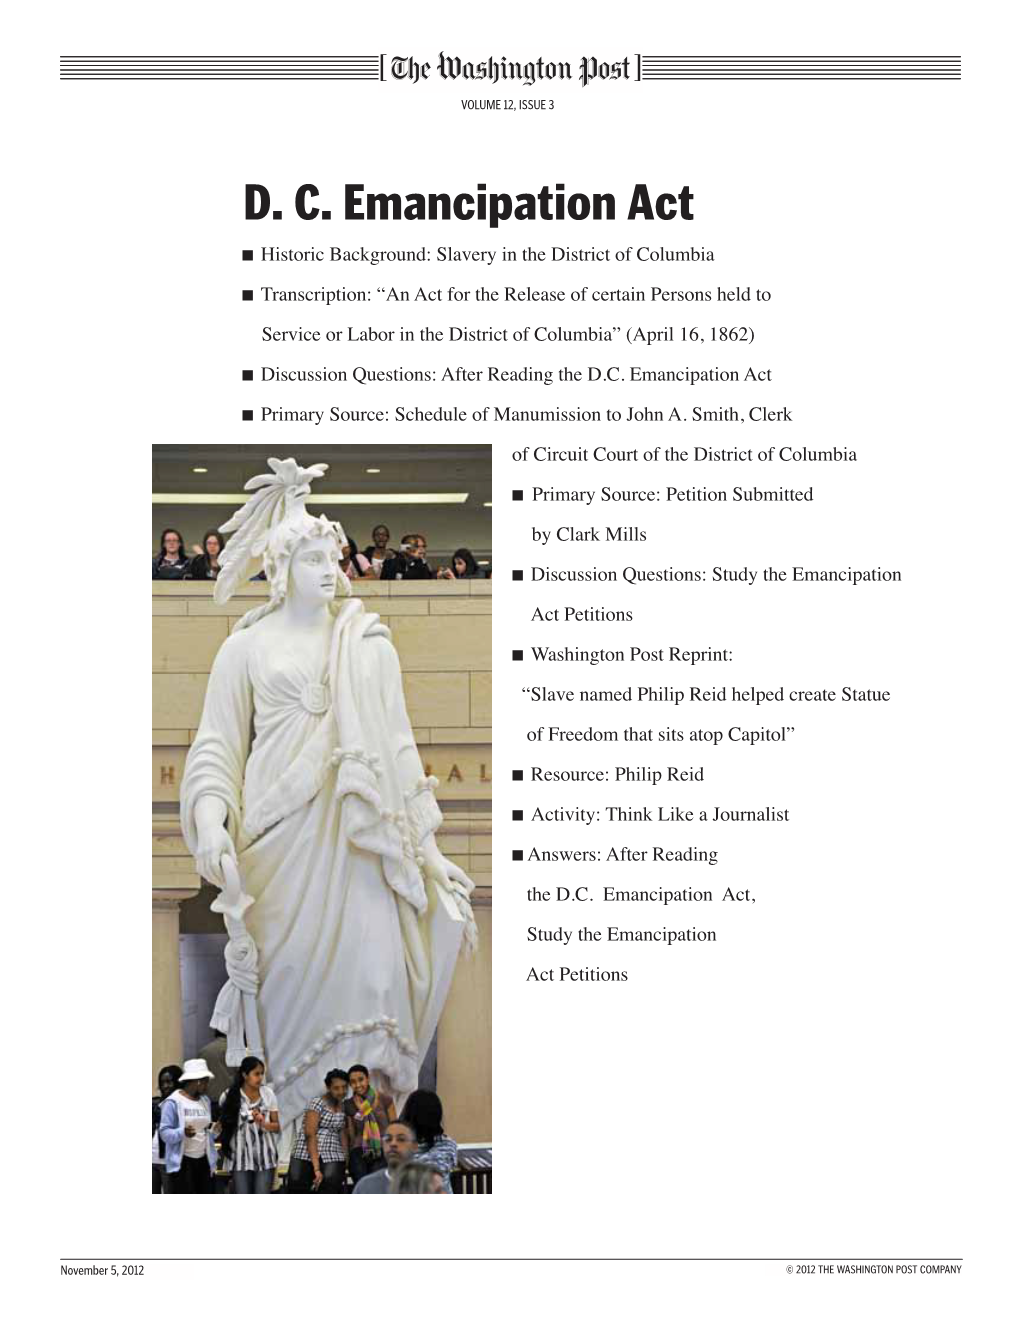 D. C. Emancipation Act